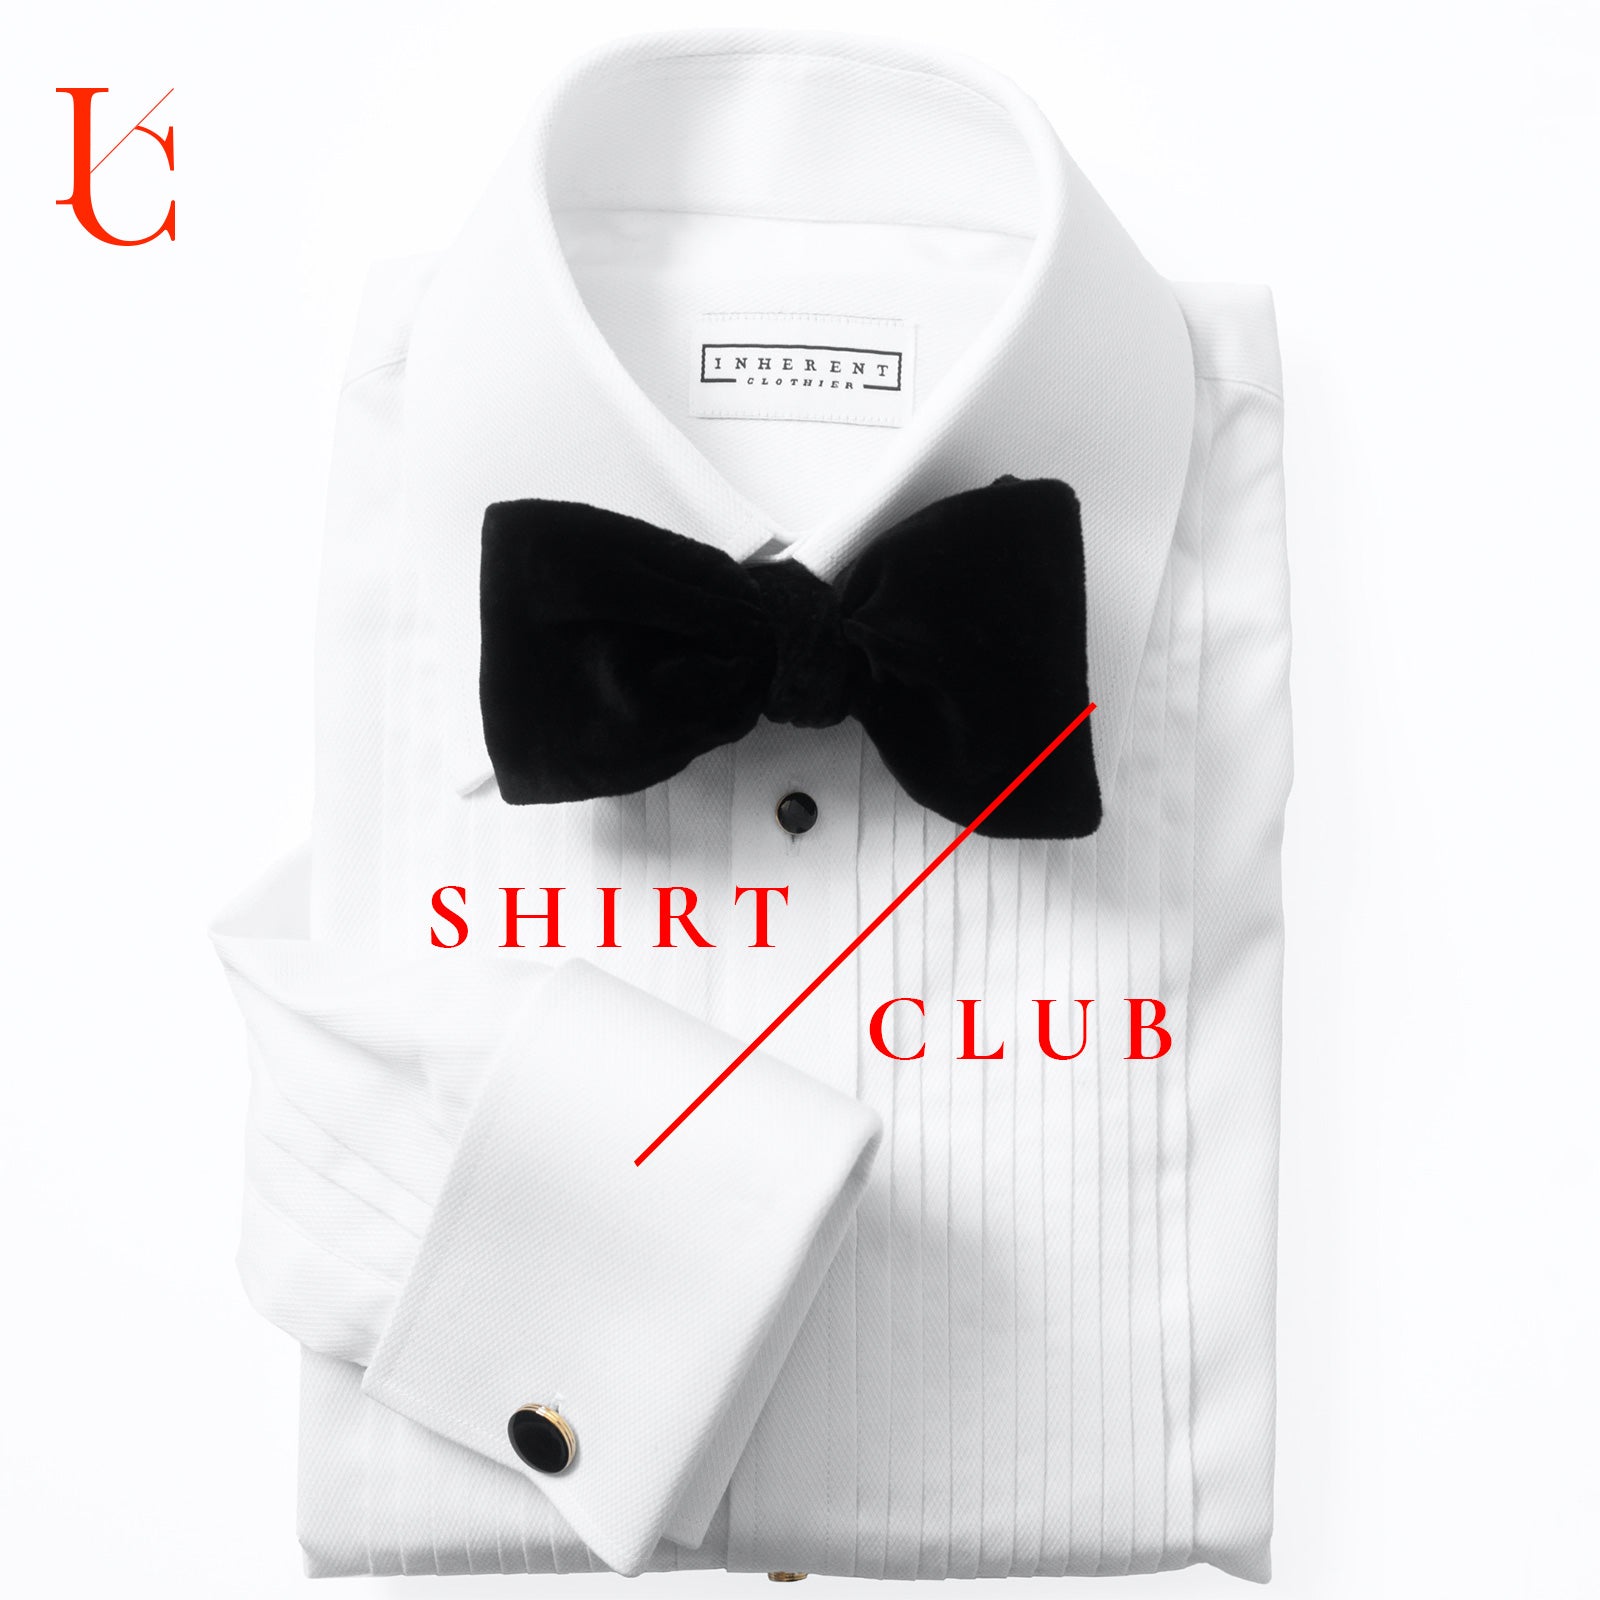 Inherent Custom Shirt Club (Monthly Subscription)